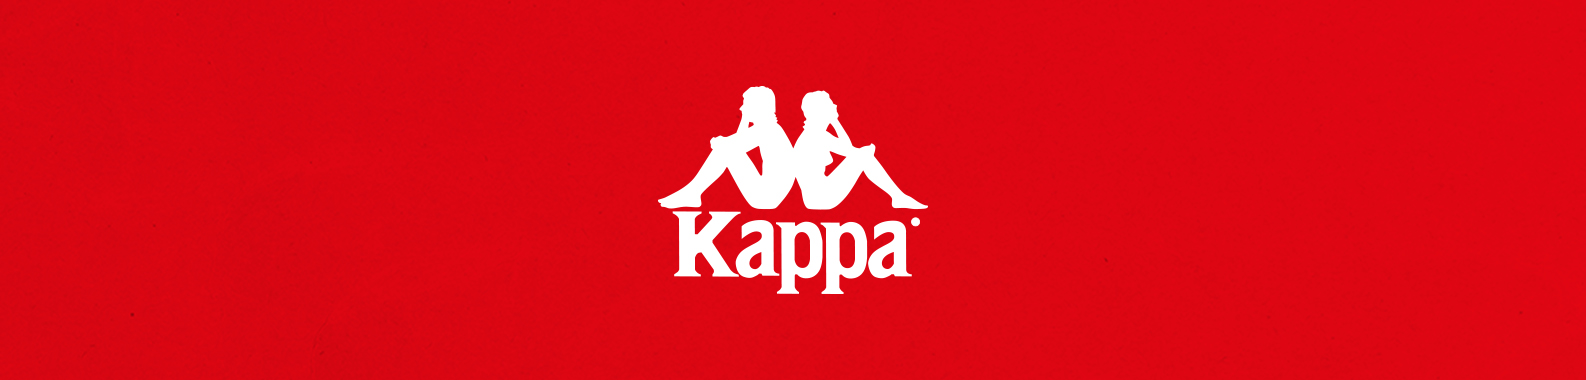 Kappa brand header image